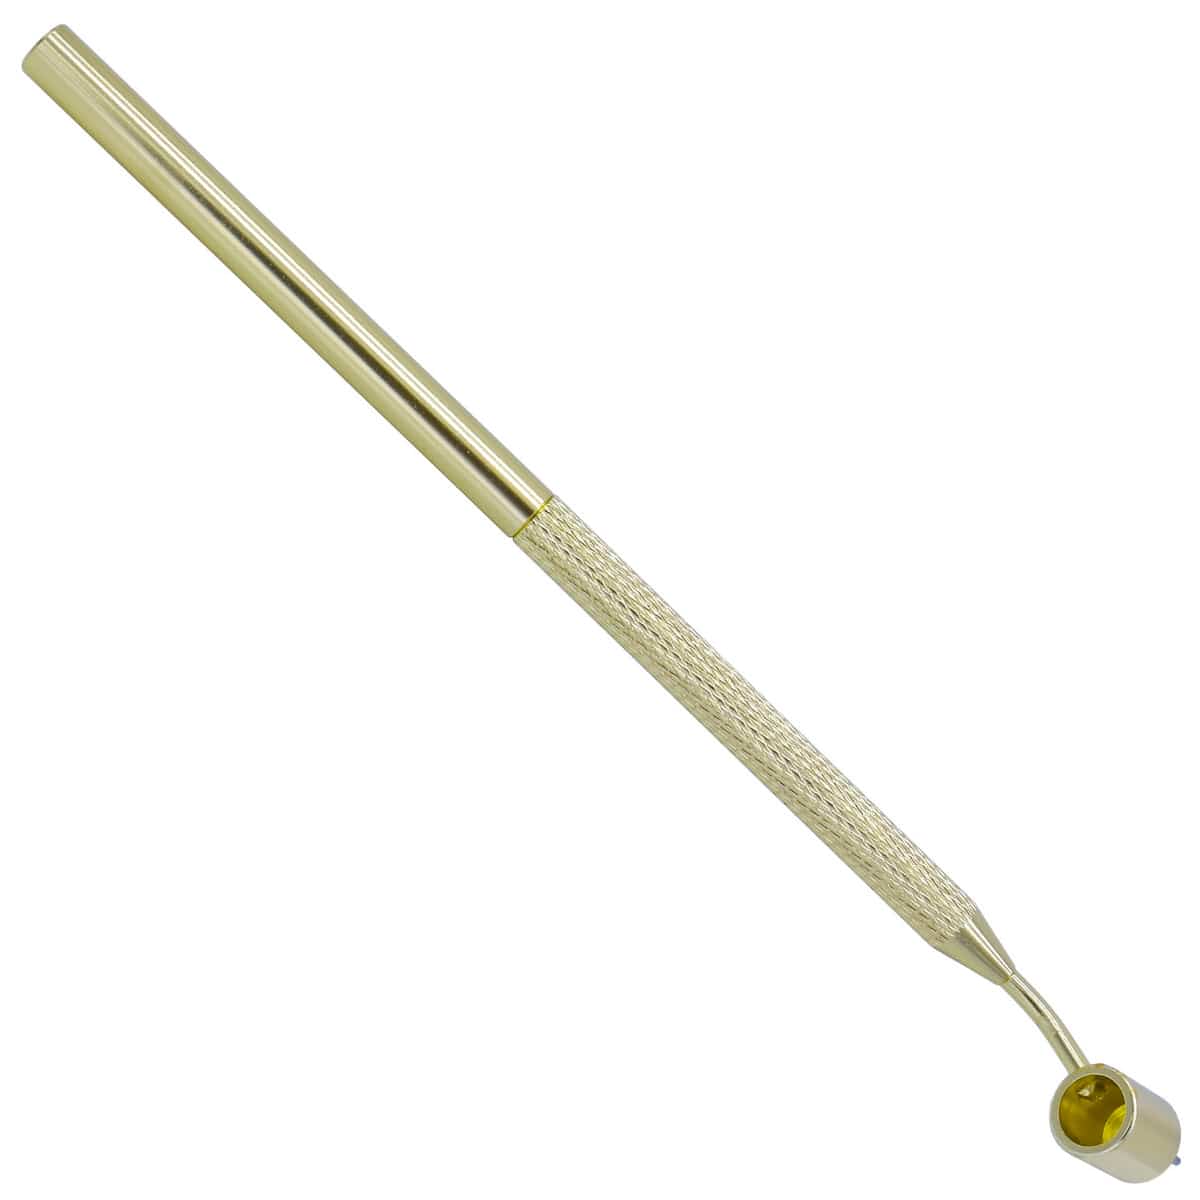 jags-mumbai Tools Vintage Slant Bar Design Pen 0.7mm - Unique and Stylish Writing Tool AGPP00